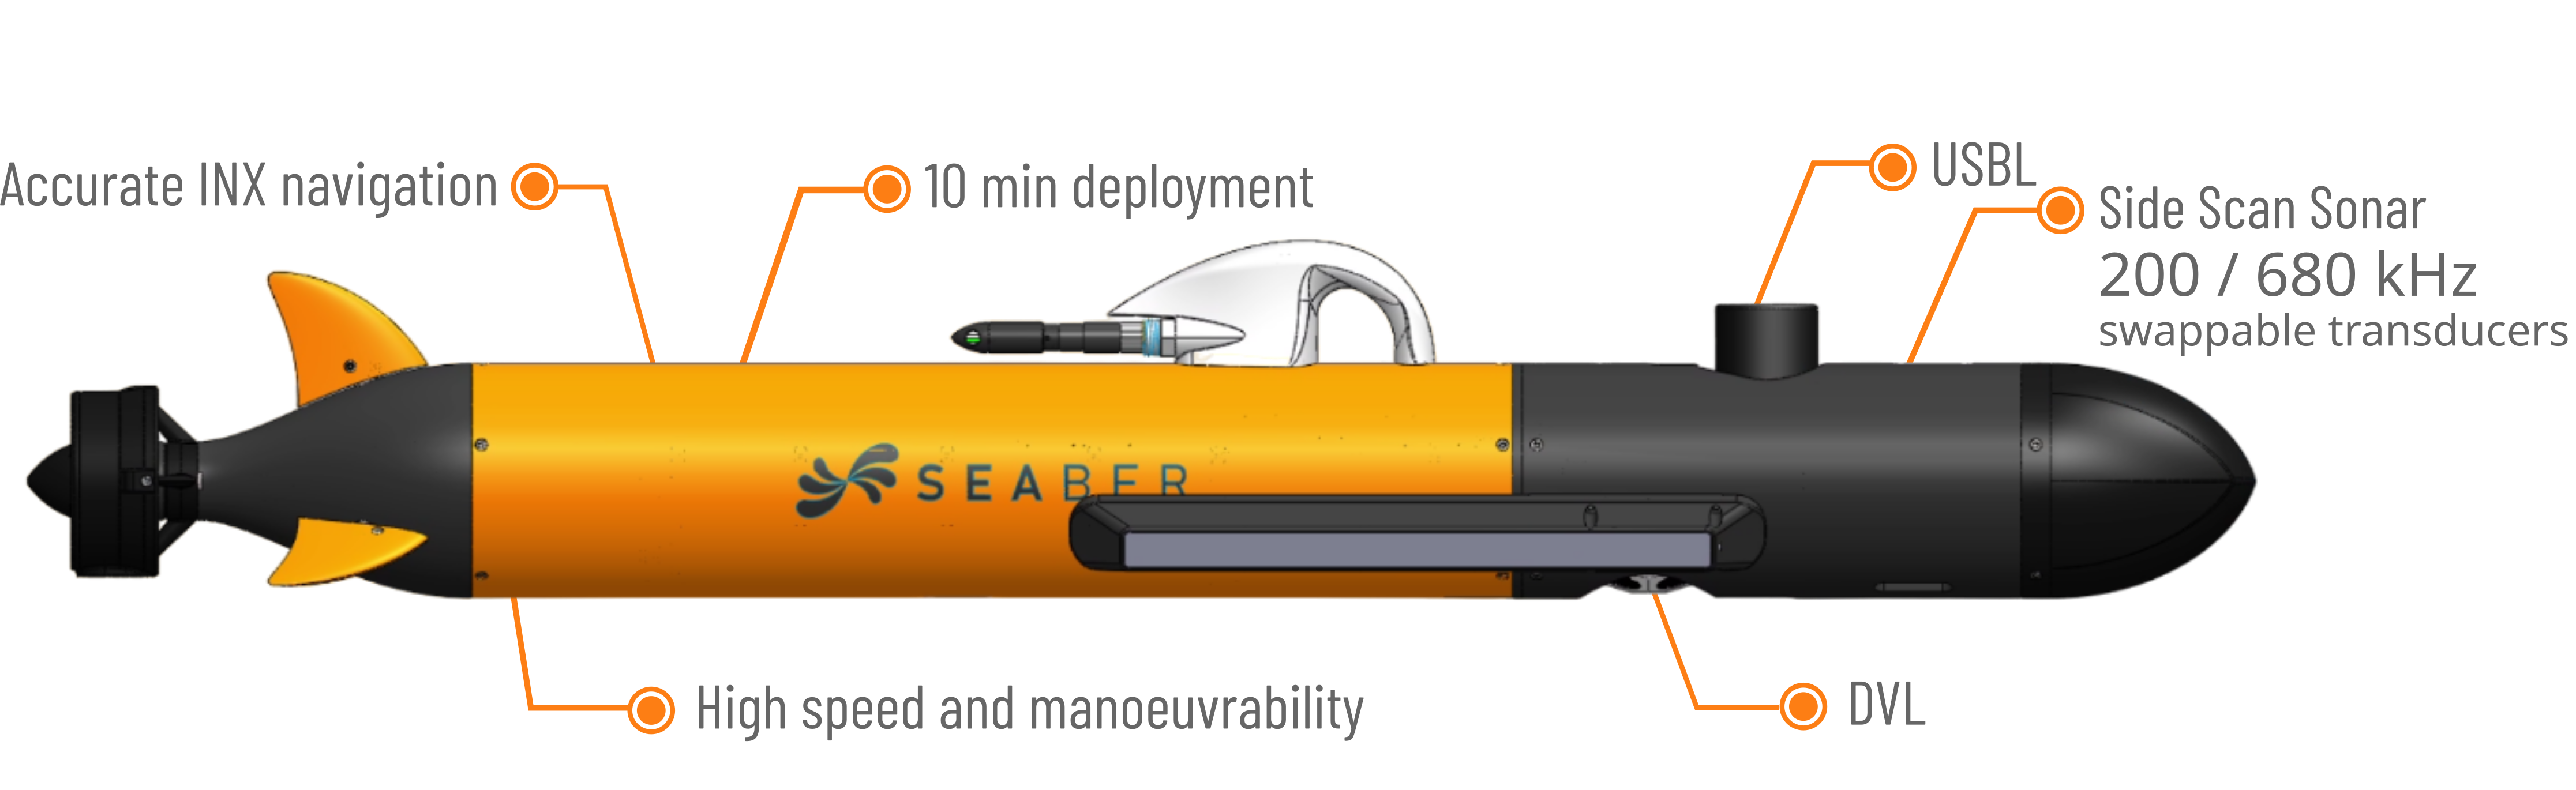 SEABER_AUV_Micro-AUV_Pink_UUV_Hydrographic_Side_Scan_Sonar_PAM_CTD_ASW_YUCO_RECALL_MARVEL_MCM_Mine_Counter_Measures_Security_Coast_Guard_Underwater_Drone_Autonomous Underwater Vehicles_Magnetometer_Sensys_UXO_Multibeam echosounder_MBES_Imagenex